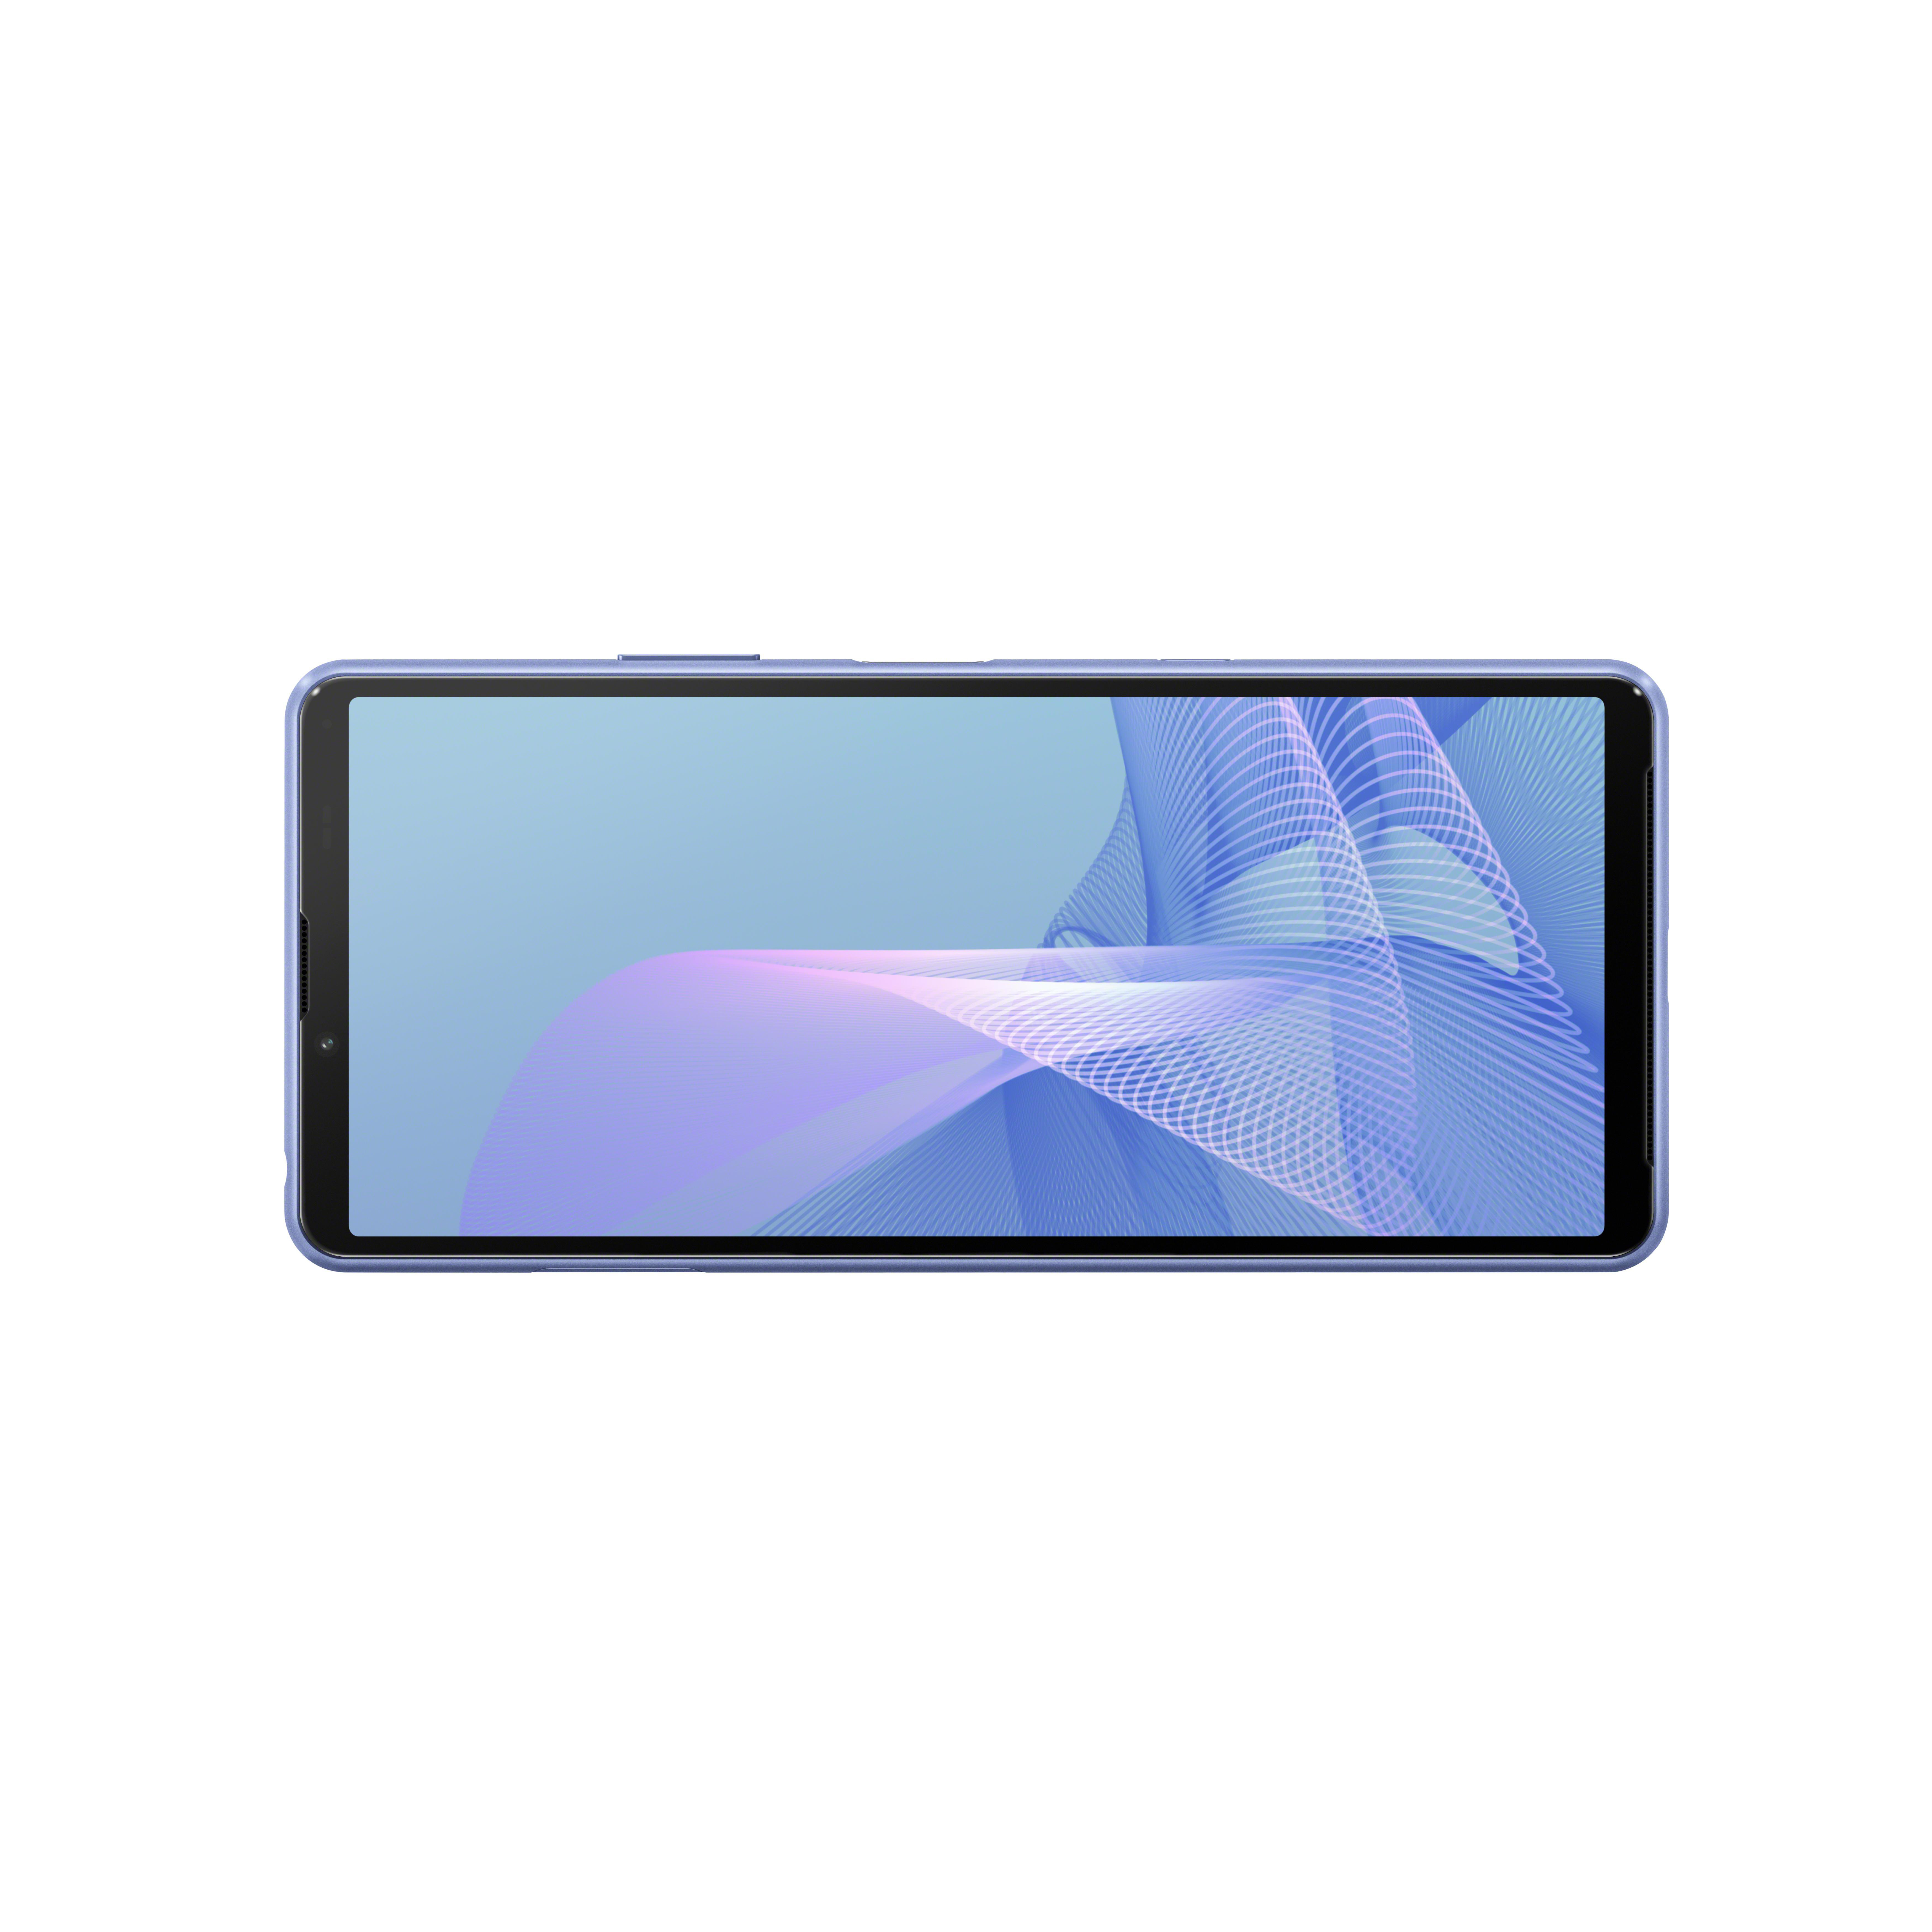 Xperia Blau SONY 5G Dual Display 128 21:9 GB SIM 10 III